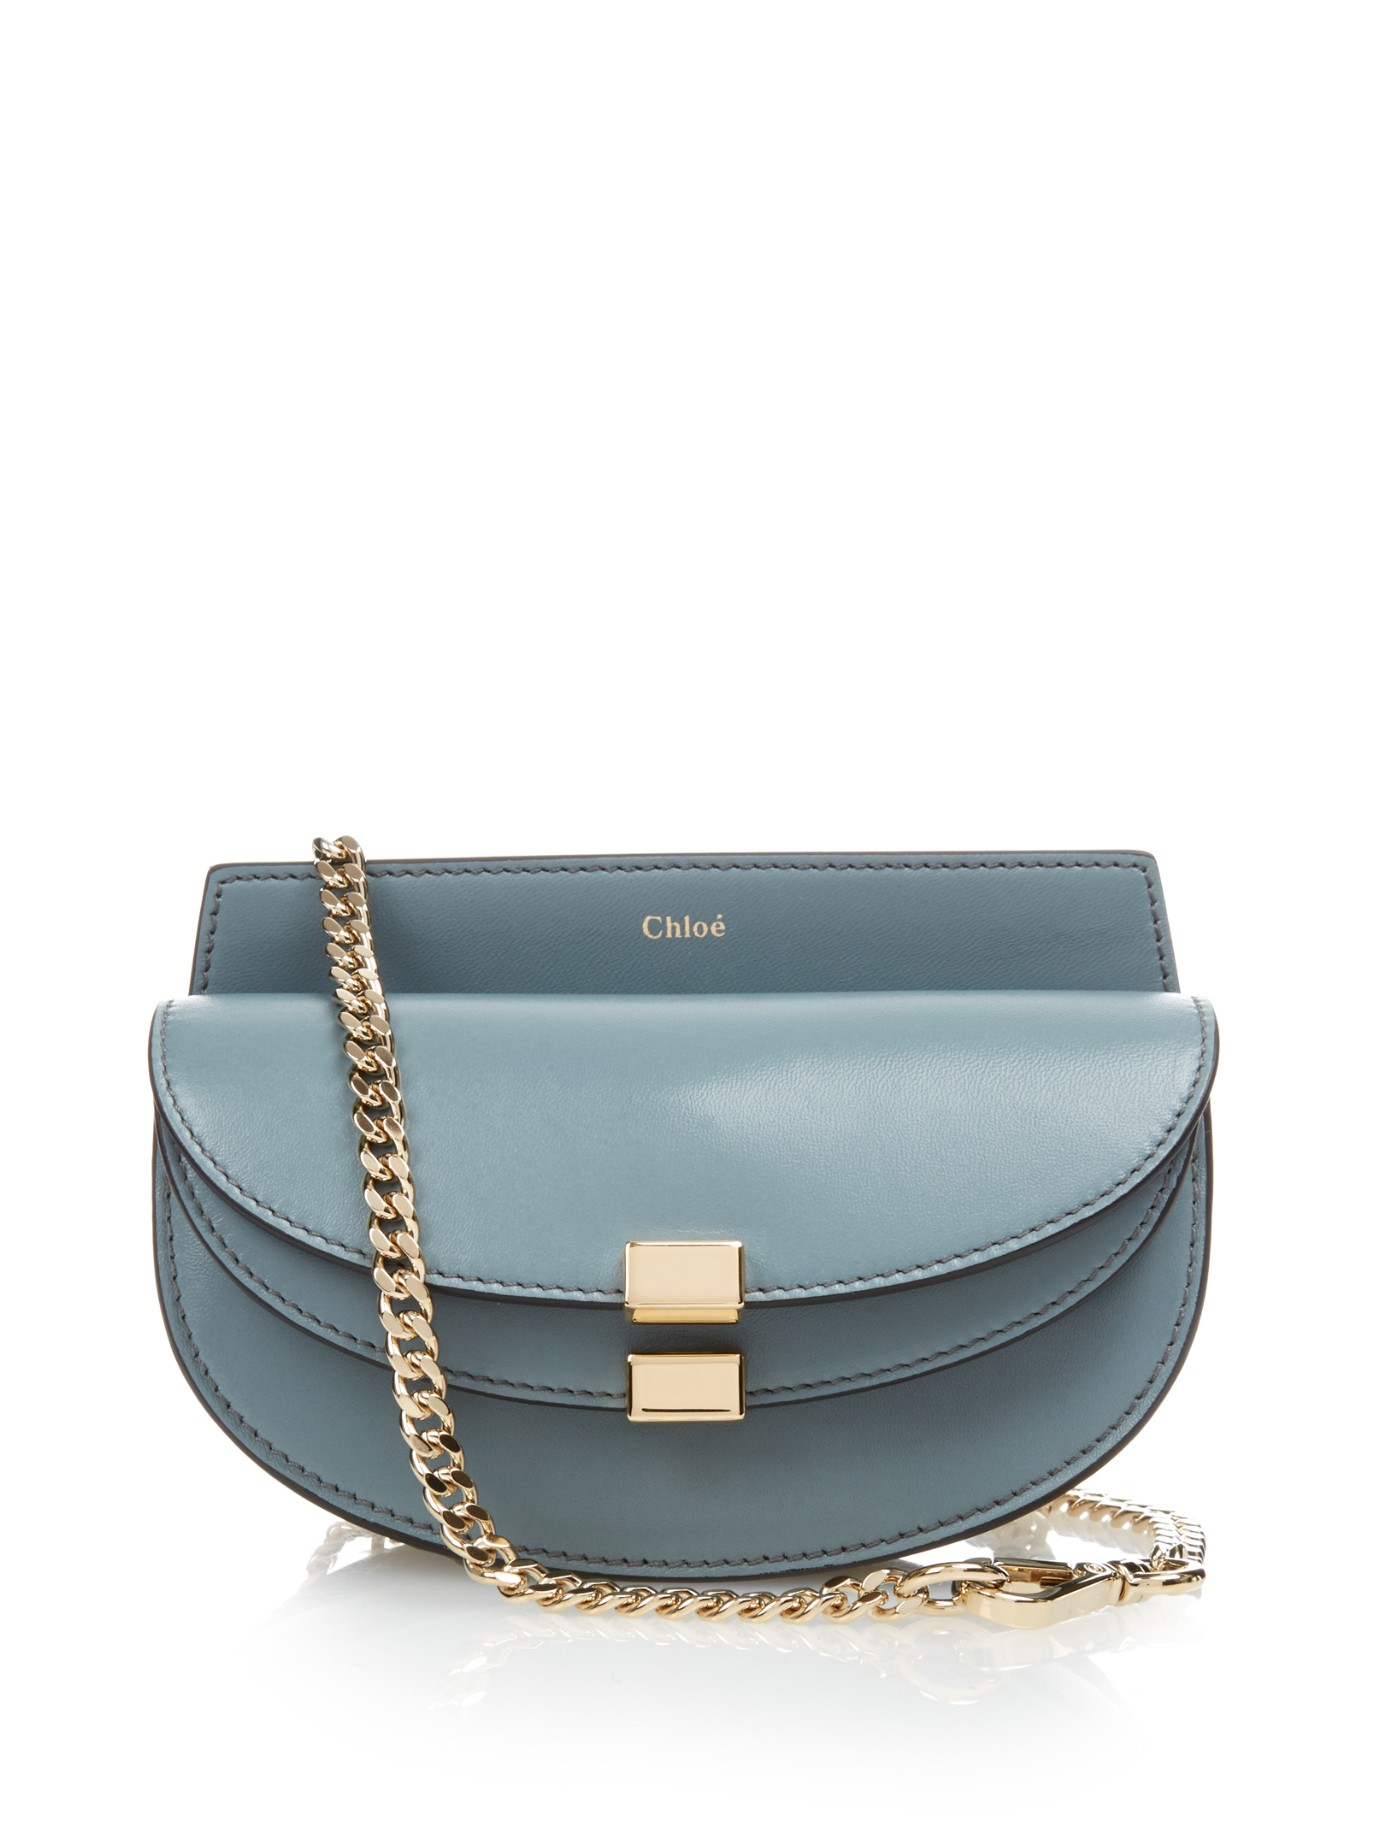 Chloé Georgia Leather Cross-body Bag in Blue | Lyst